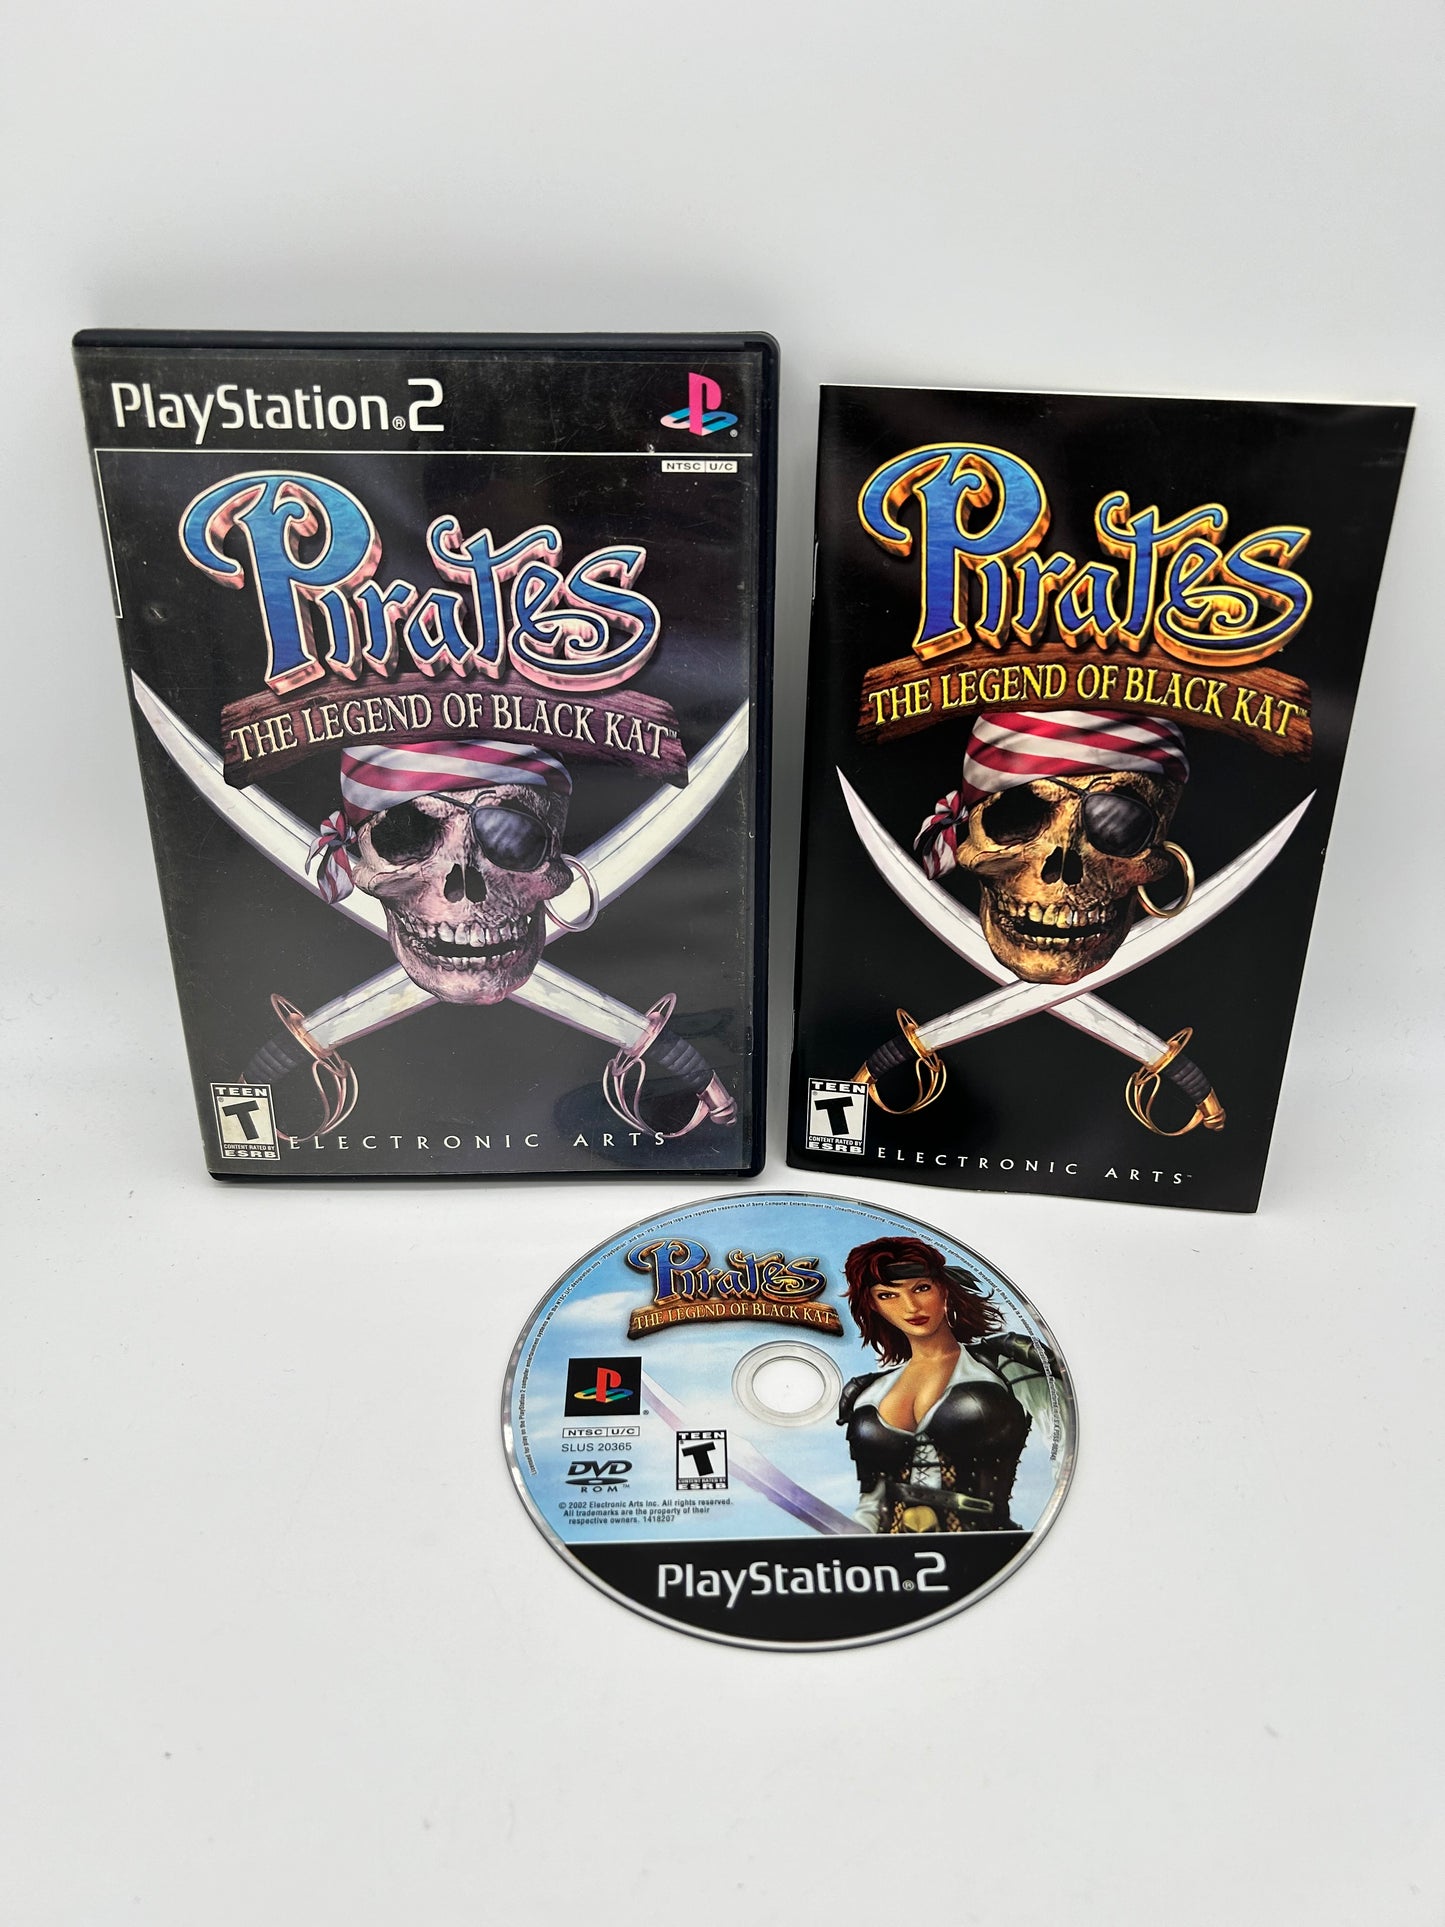 PiXEL-RETRO.COM : SONY PLAYSTATION 2 (PS2) COMPLET CIB BOX MANUAL GAME NTSC PIRATES THE LEGEND OF BLACK KAT